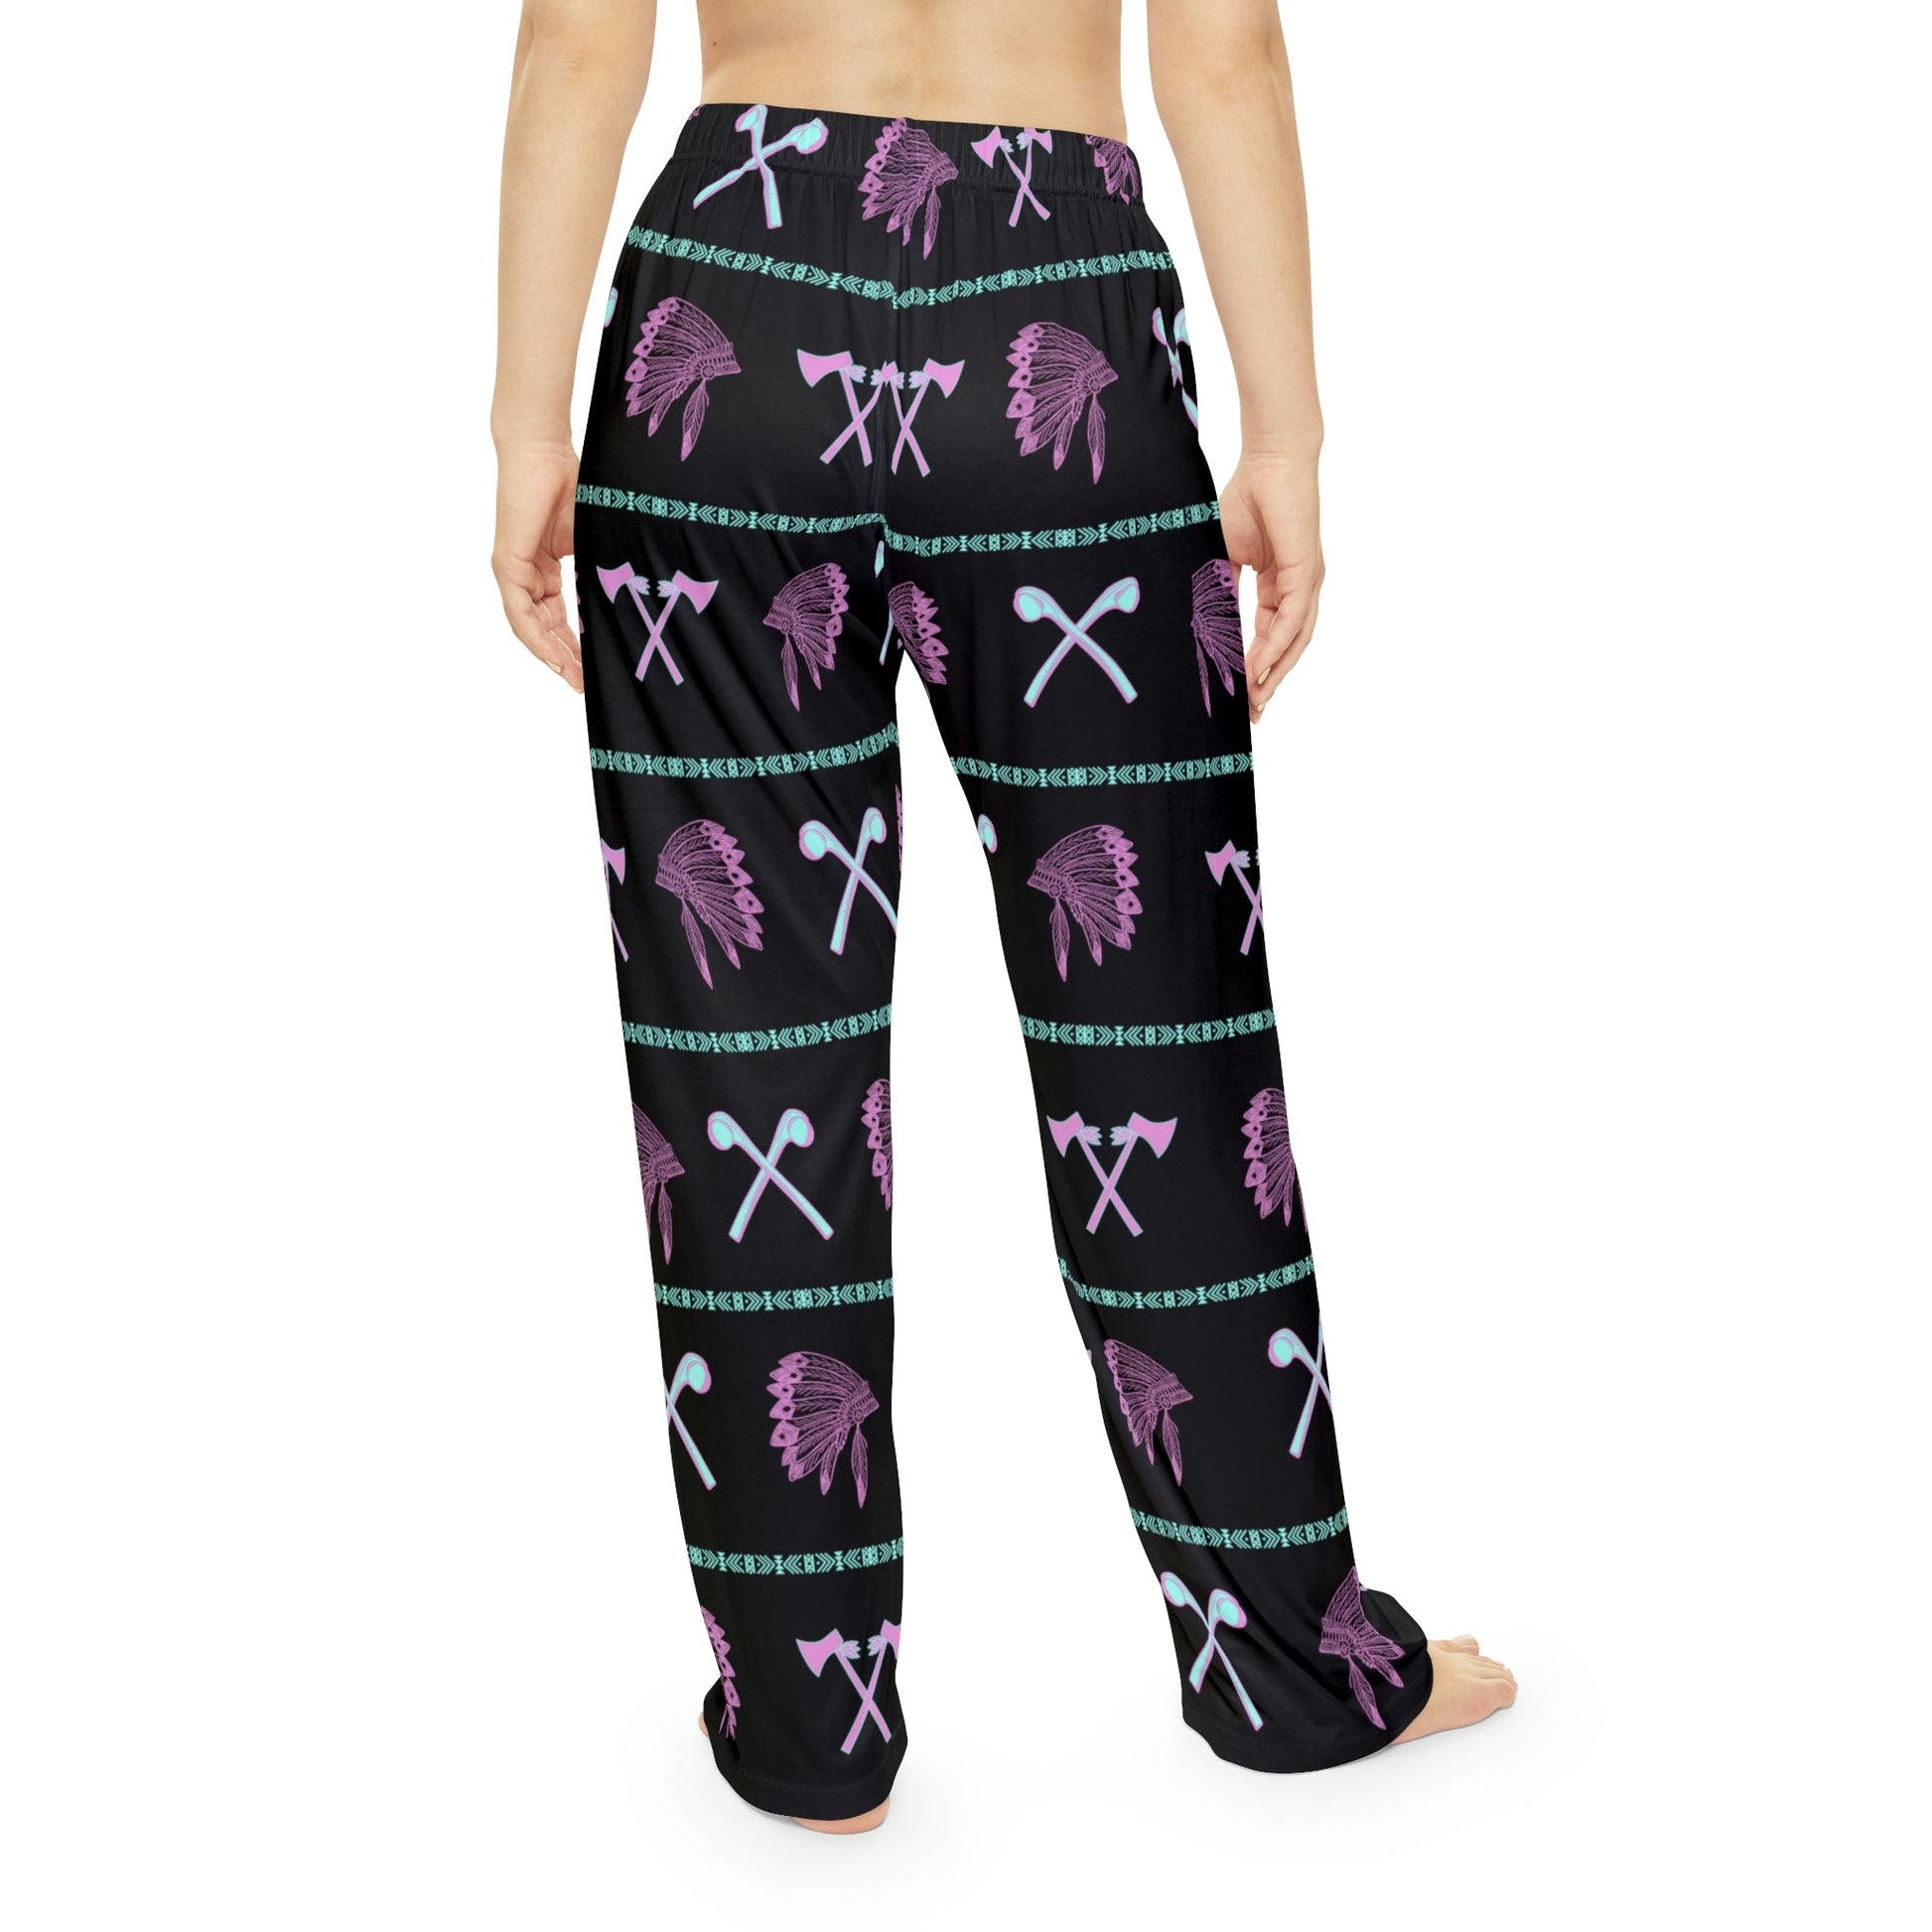 Native Women's Pajama Pants Black - Nikikw Designs